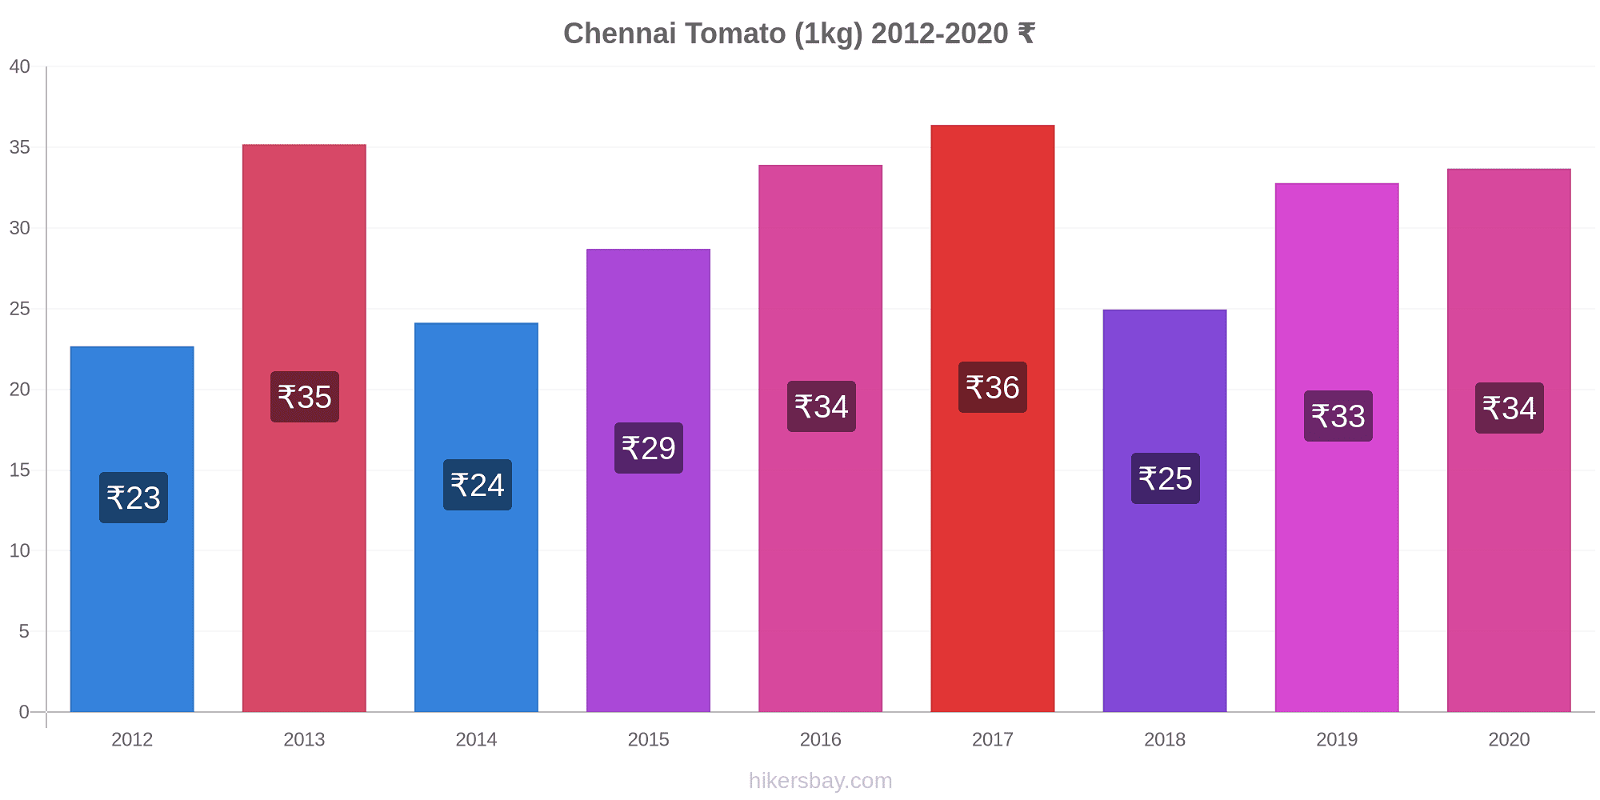 Chennai price changes Tomato (1kg) hikersbay.com